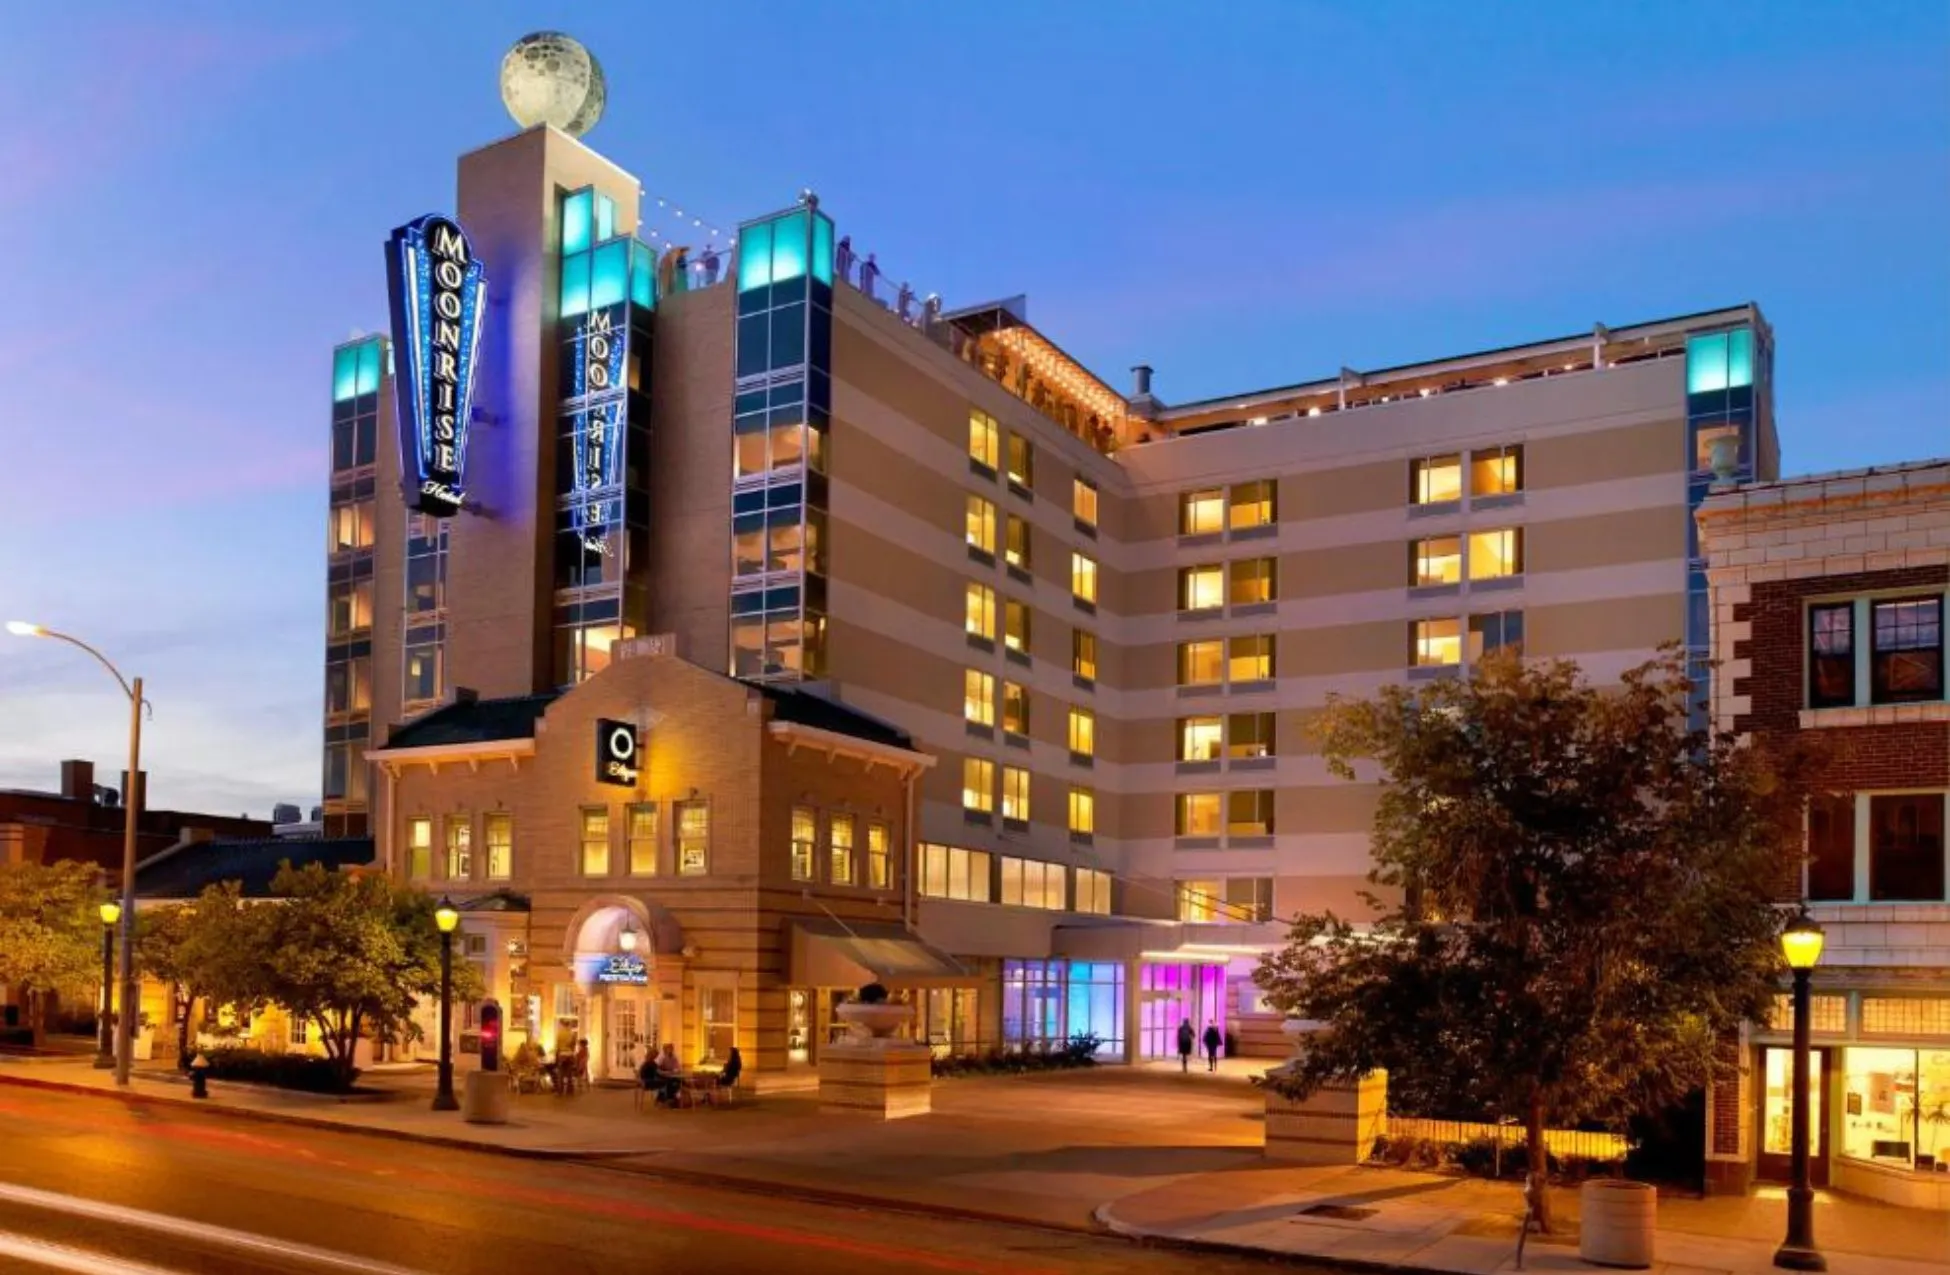 Moonrise Hotel - Best Hotels In St. Louis